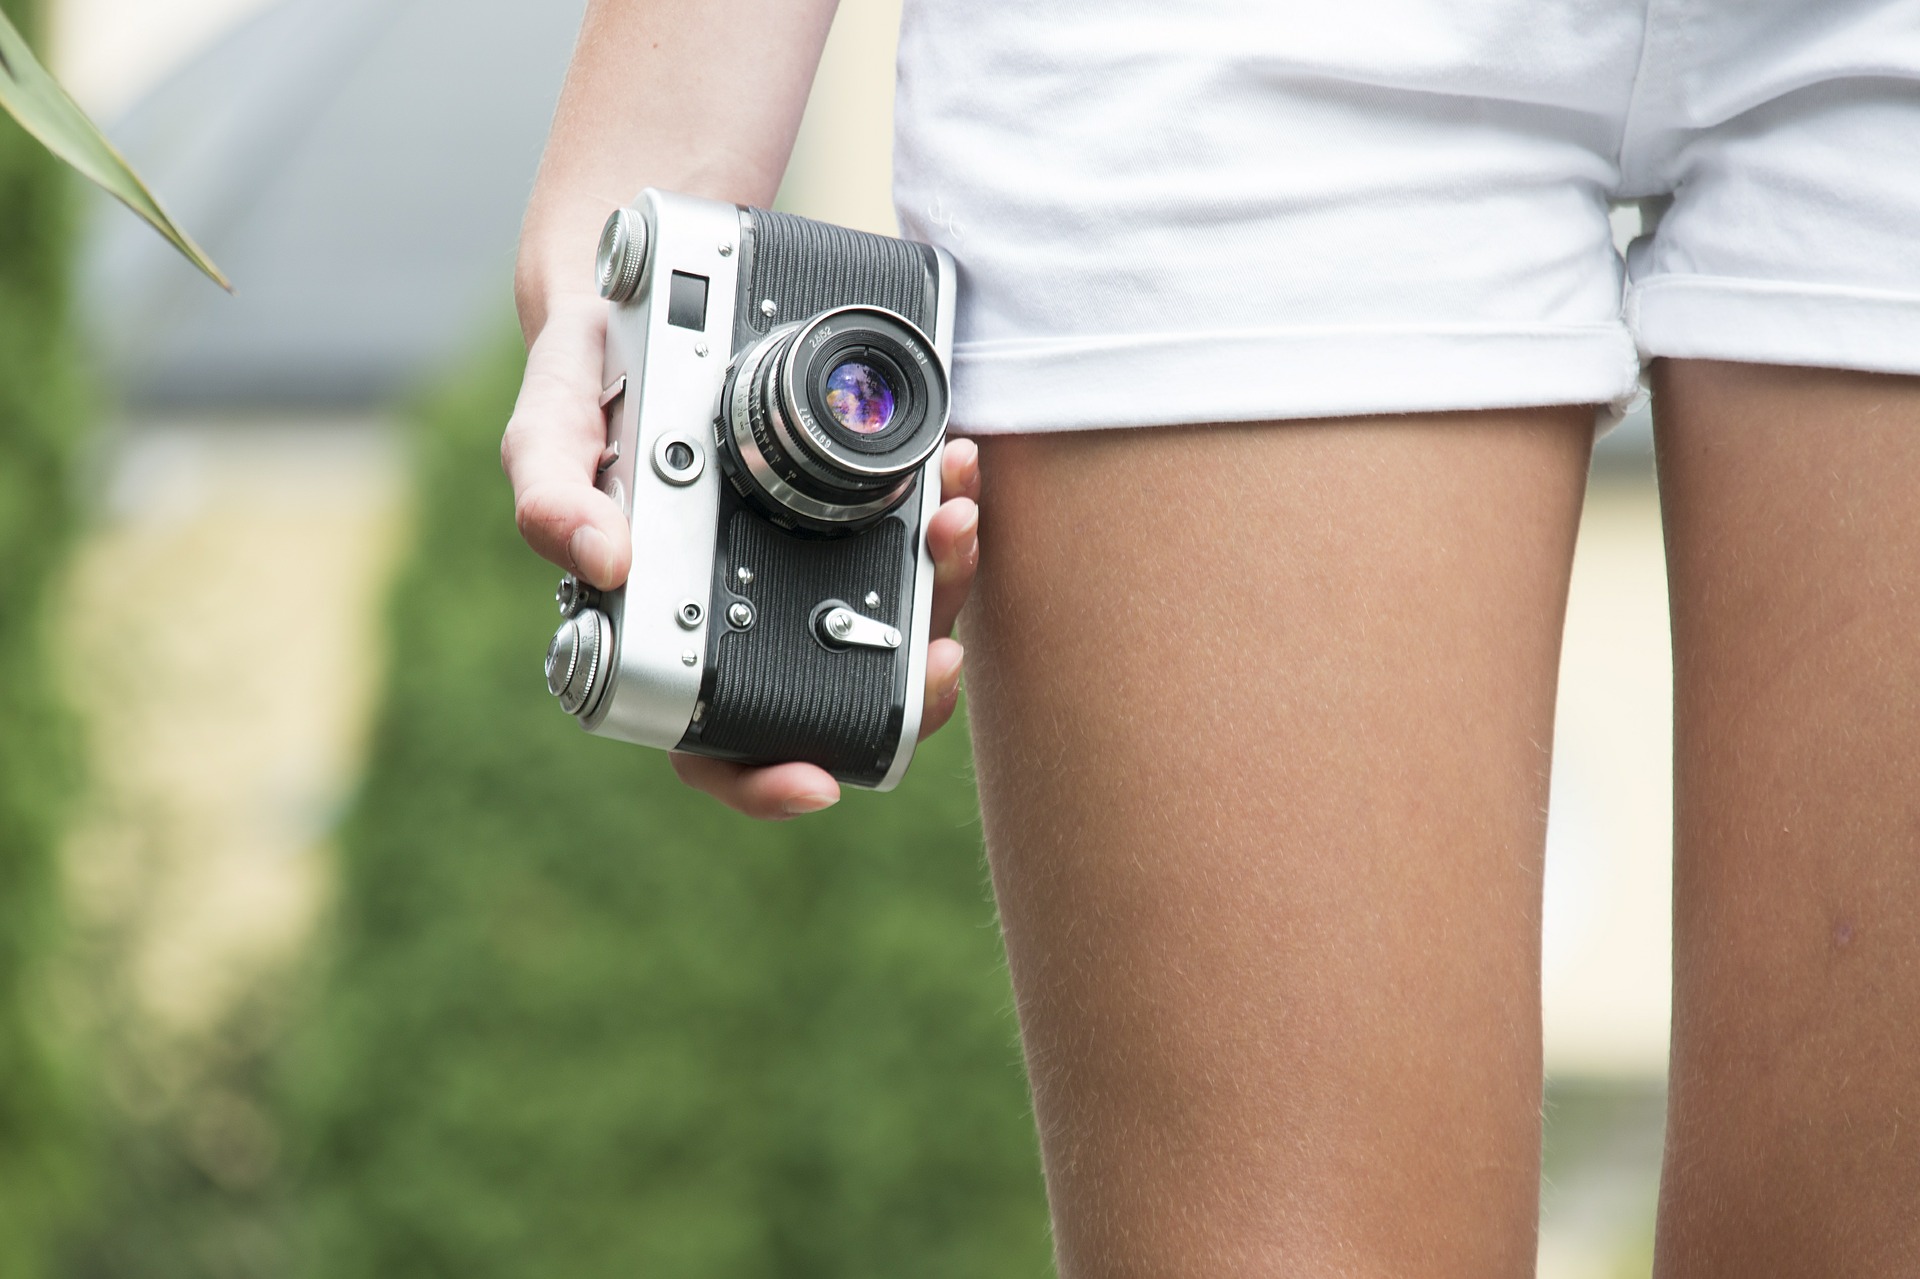 Girl holding camera